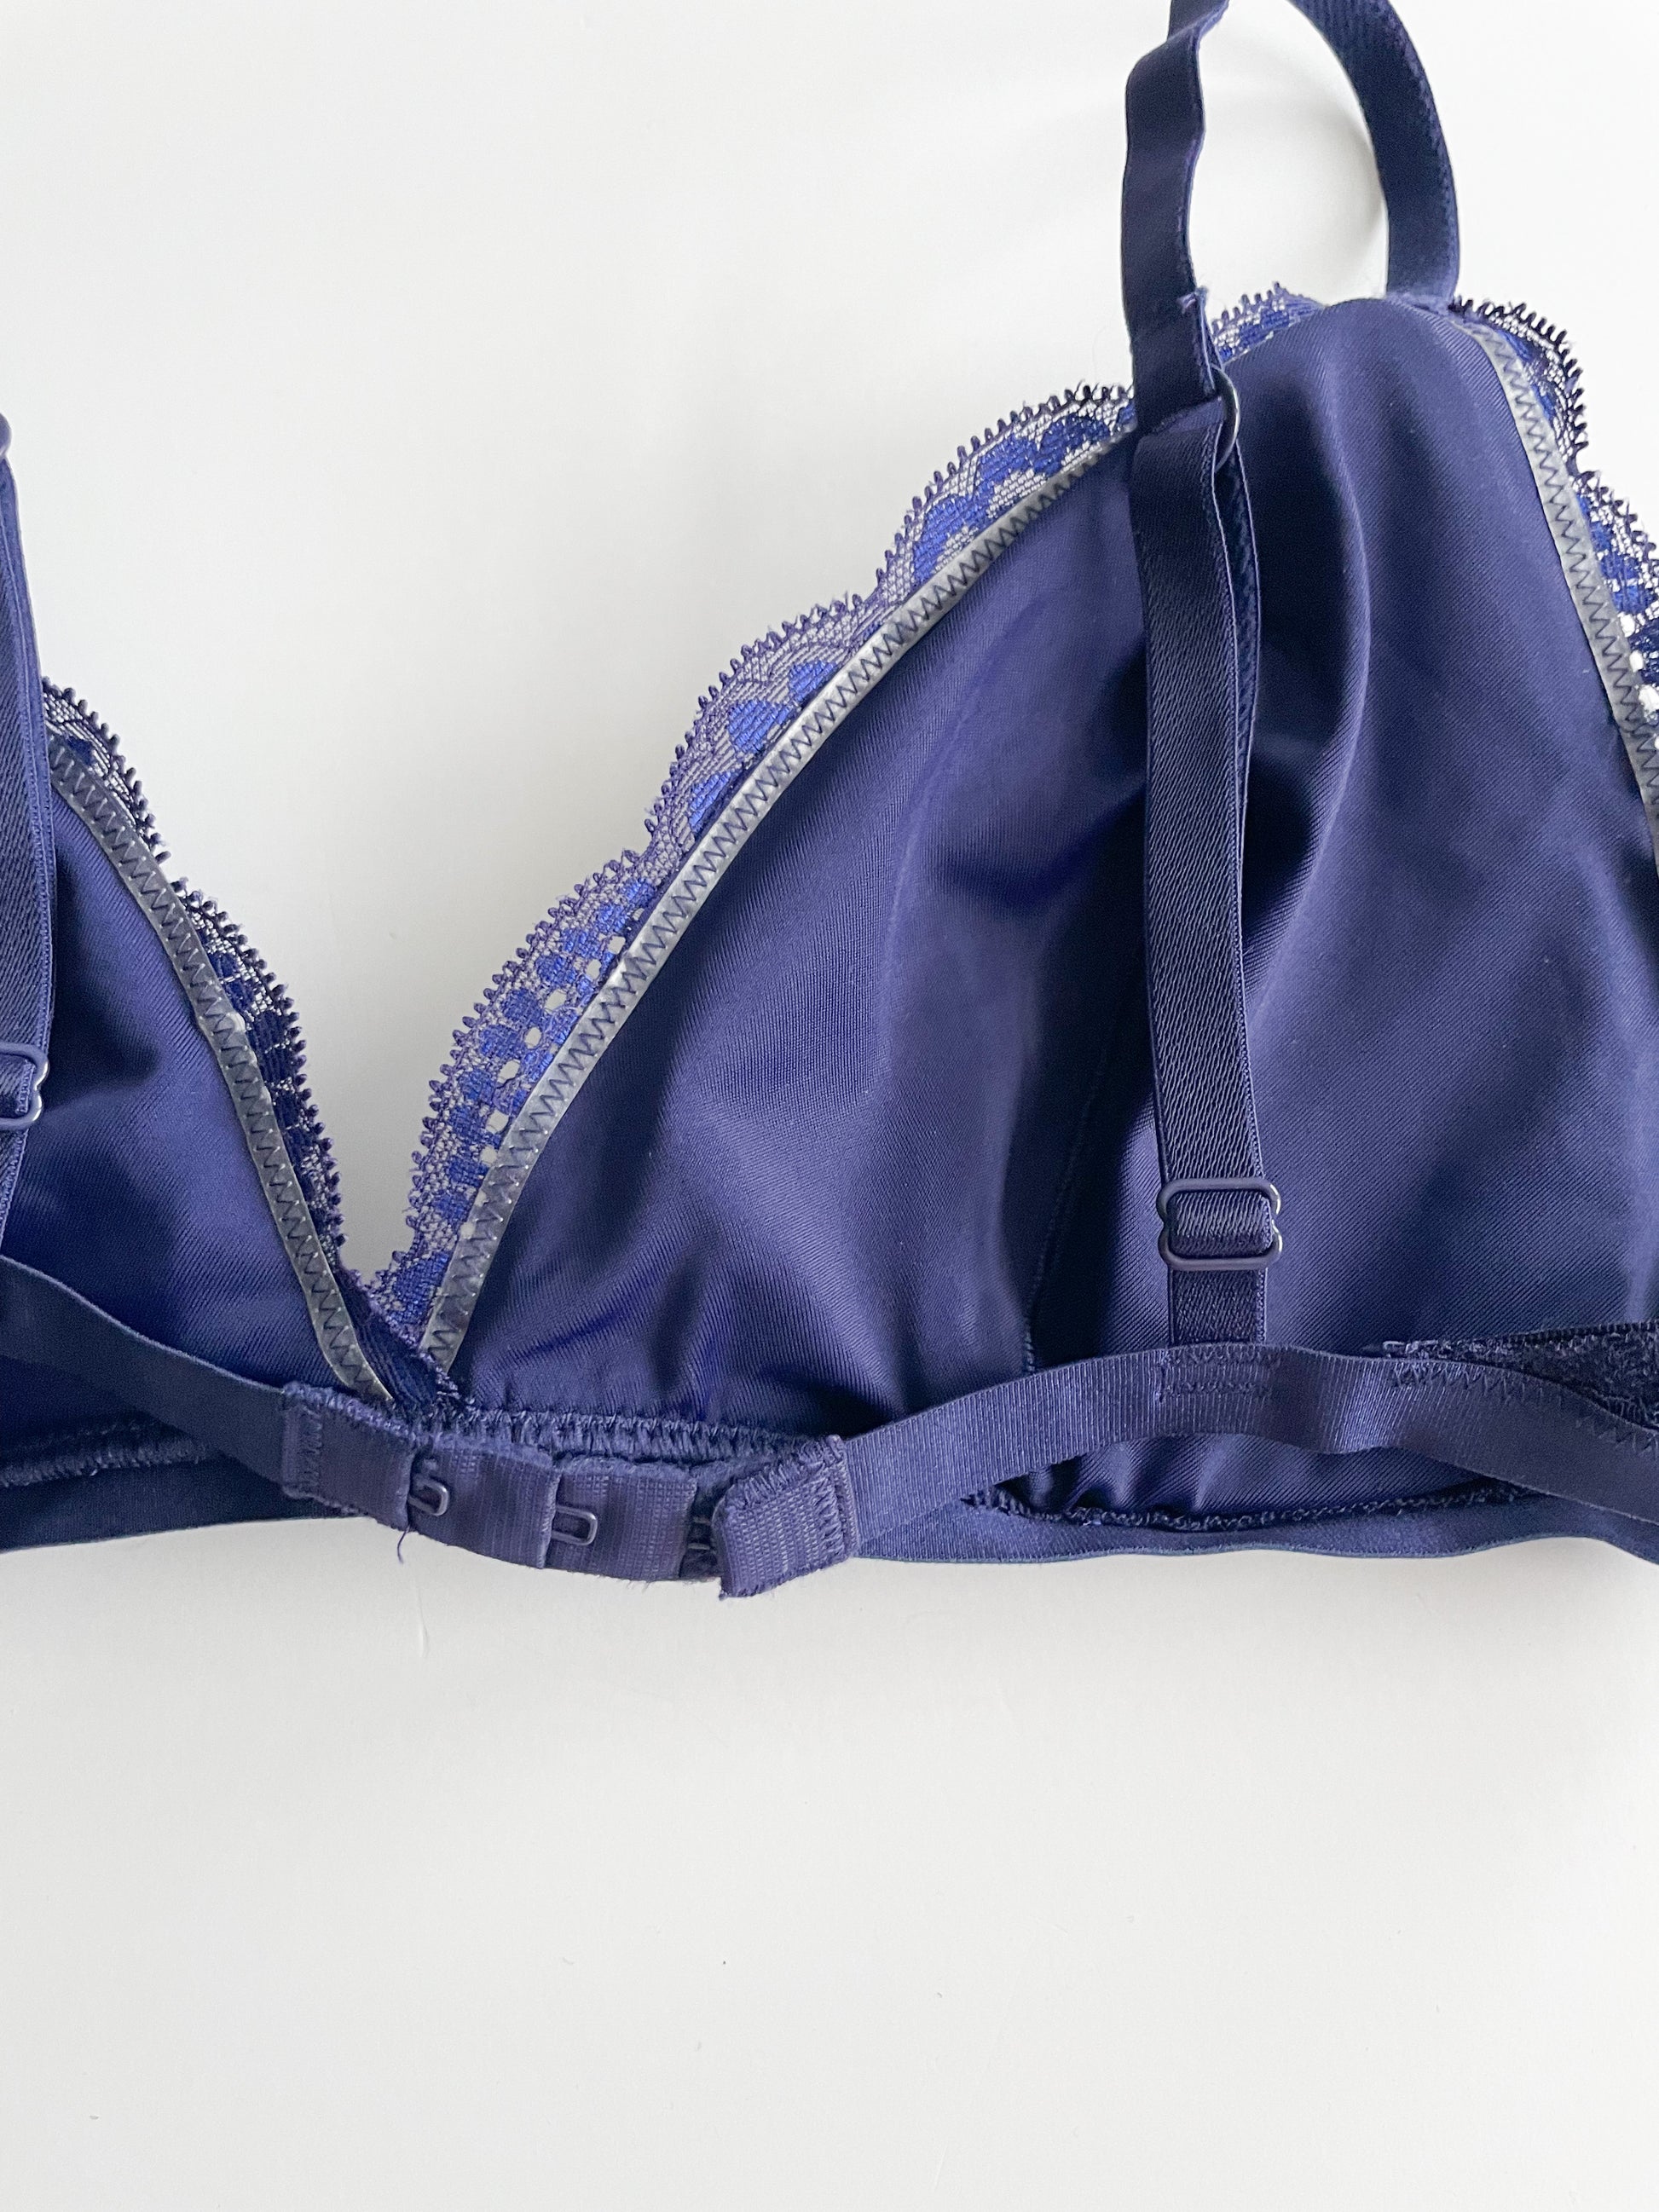 La Senza Blue Lace Lined Triangle Bralette - Medium – Le Prix